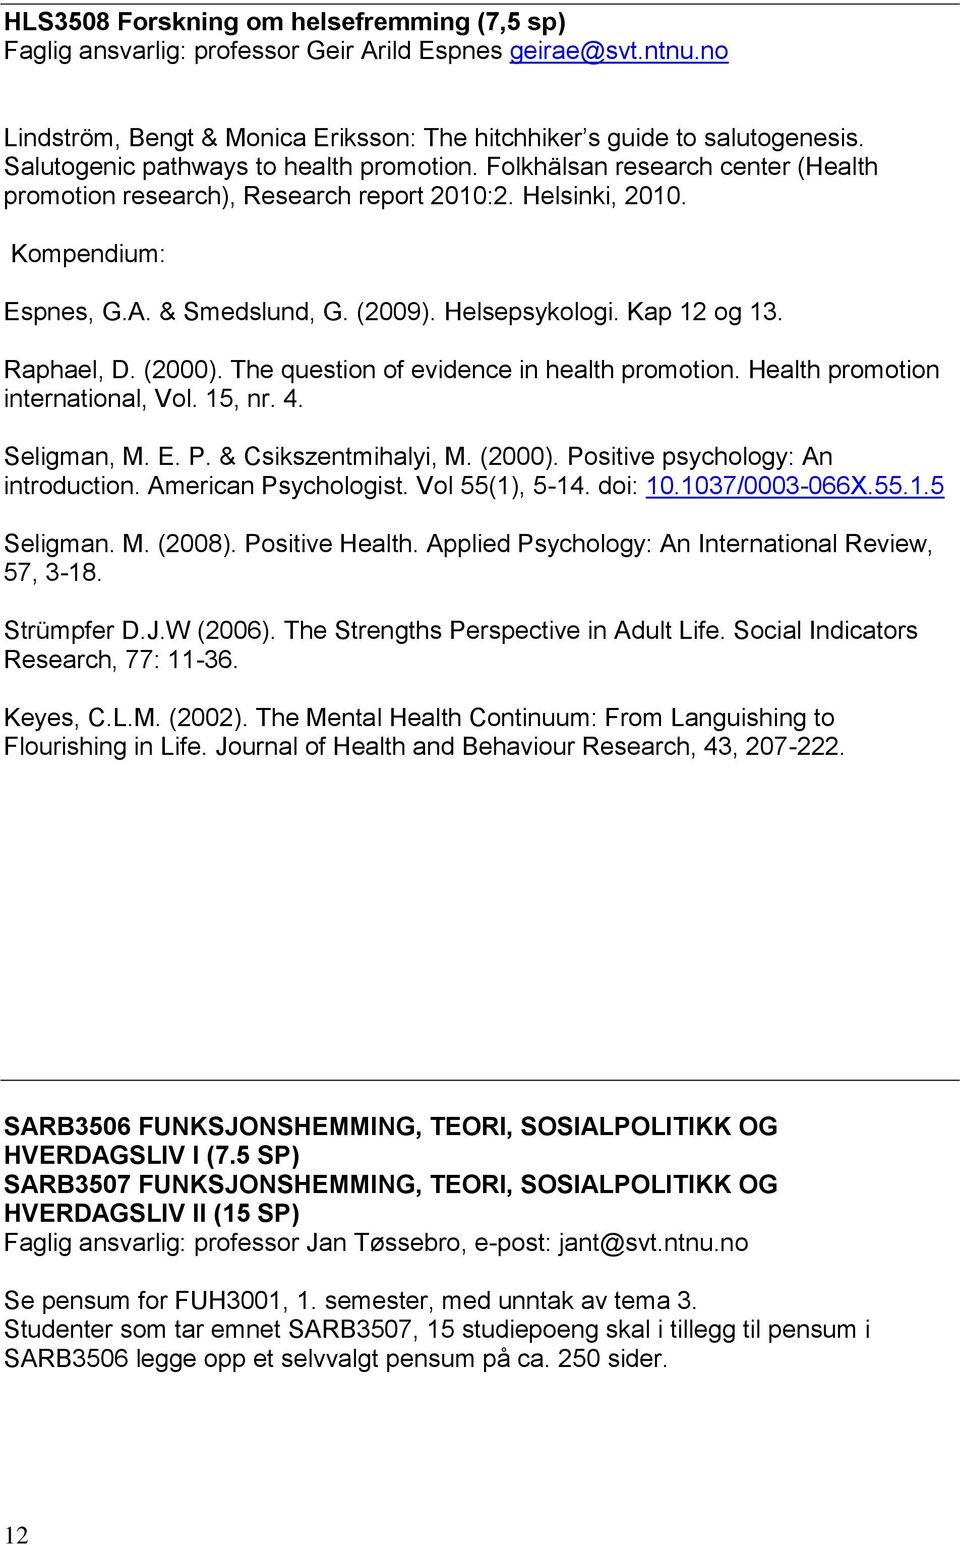 Helsepsykologi. Kap 12 og 13. Raphael, D. (2000). The question of evidence in health promotion. Health promotion international, Vol. 15, nr. 4. Seligman, M. E. P. & Csikszentmihalyi, M. (2000). Positive psychology: An introduction.